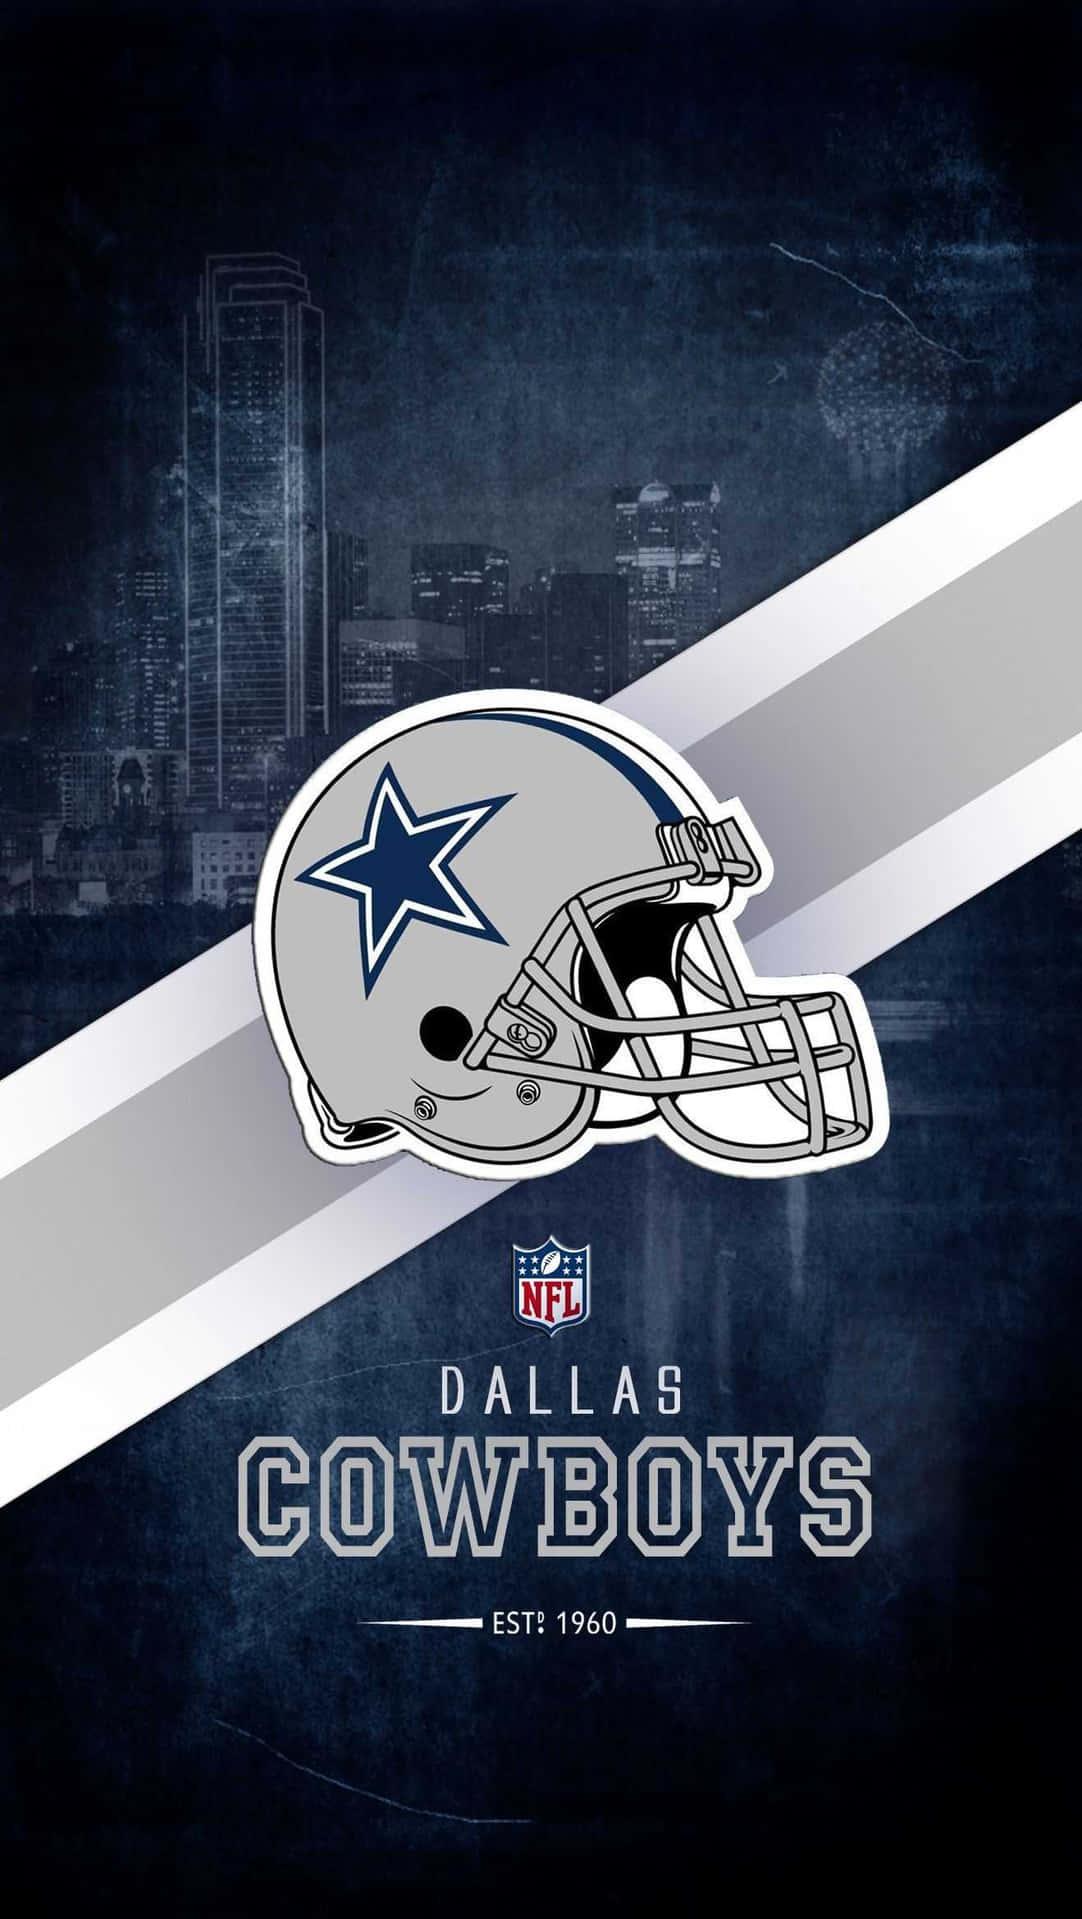 Official Nfl Dallas Cowboys iPhone Wallpaper